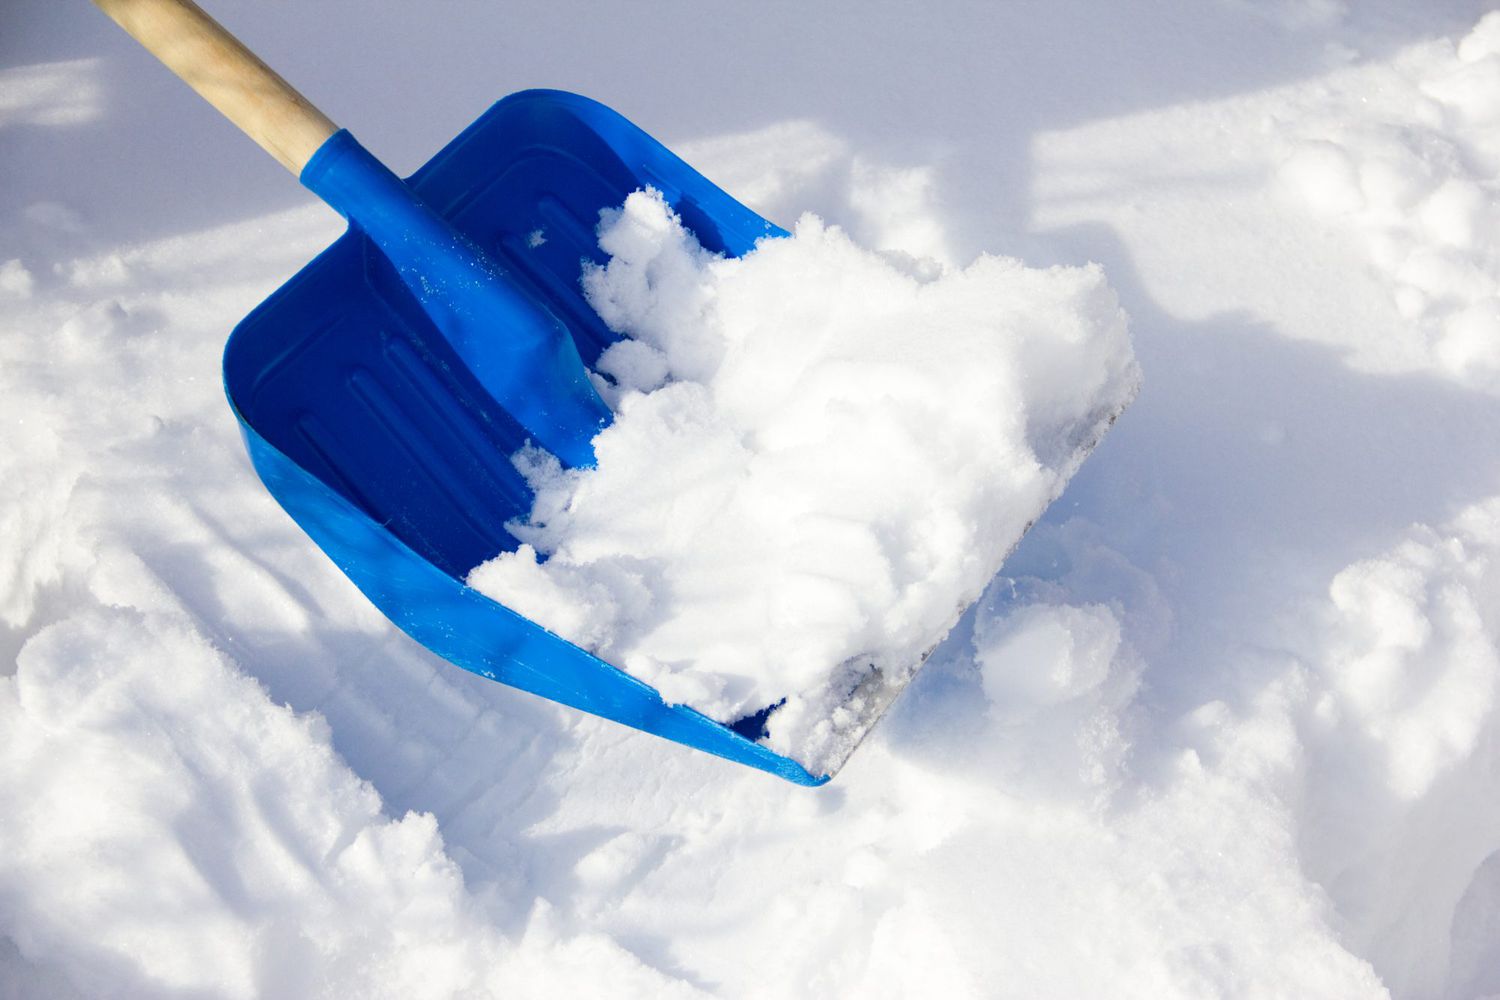 shoveling snow blue shovel